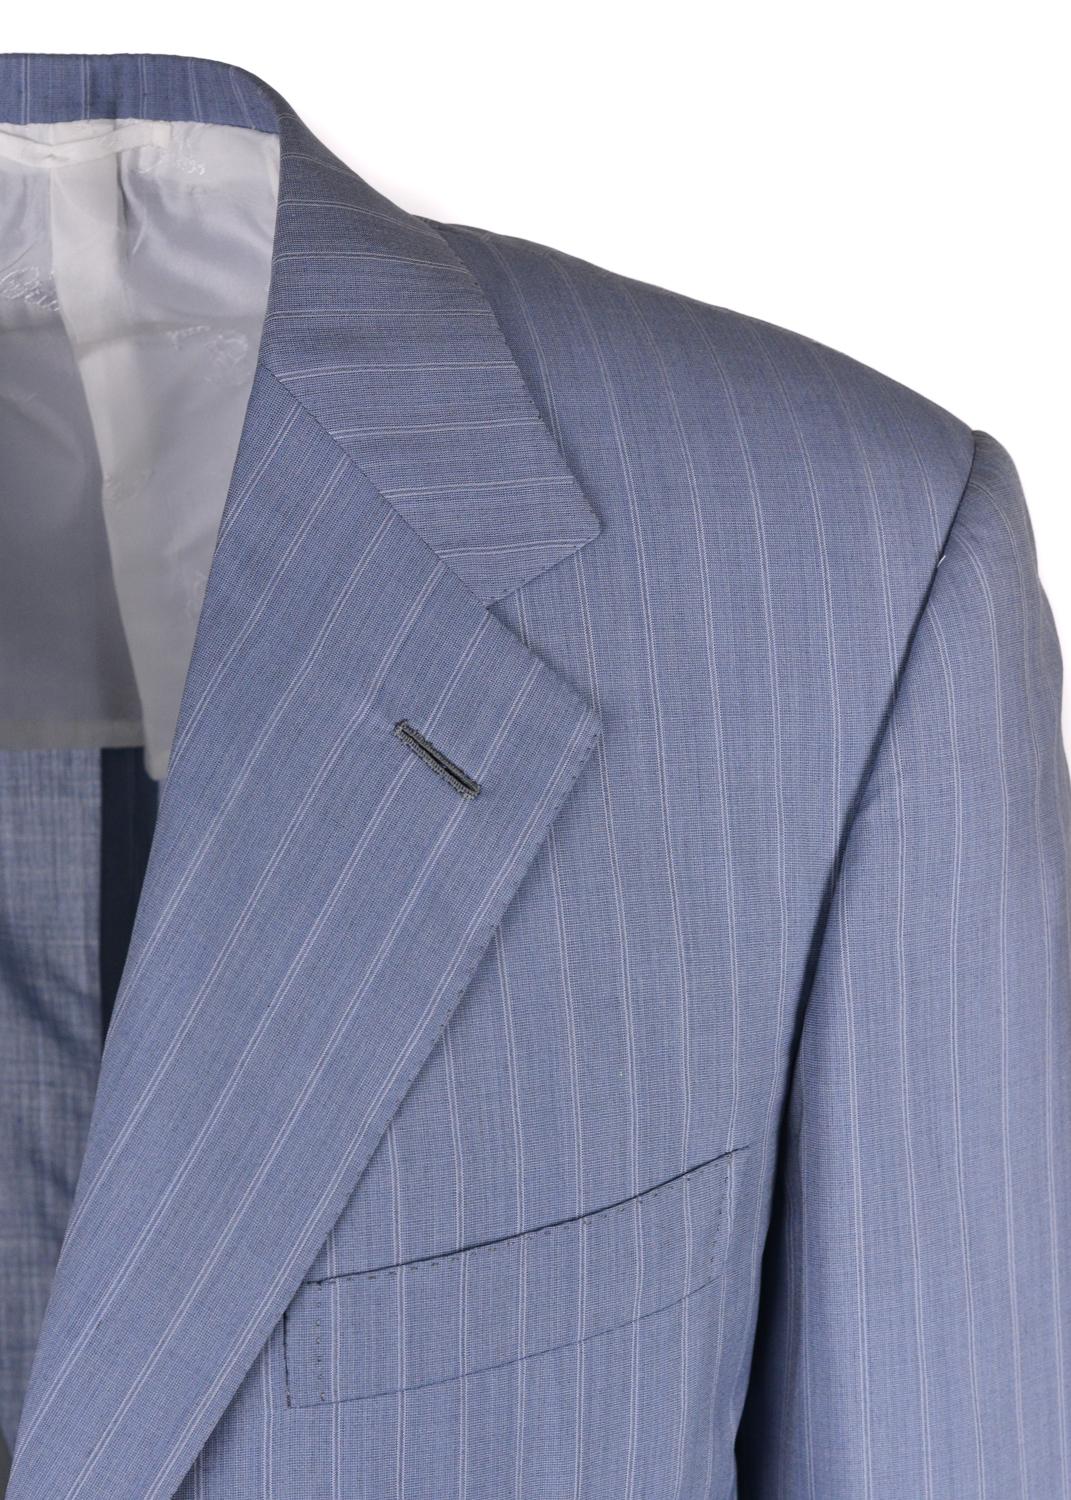 Brioni Men Three Button Blue Wool Pin Striped Senato Suit  In New Condition For Sale In Brooklyn, NY